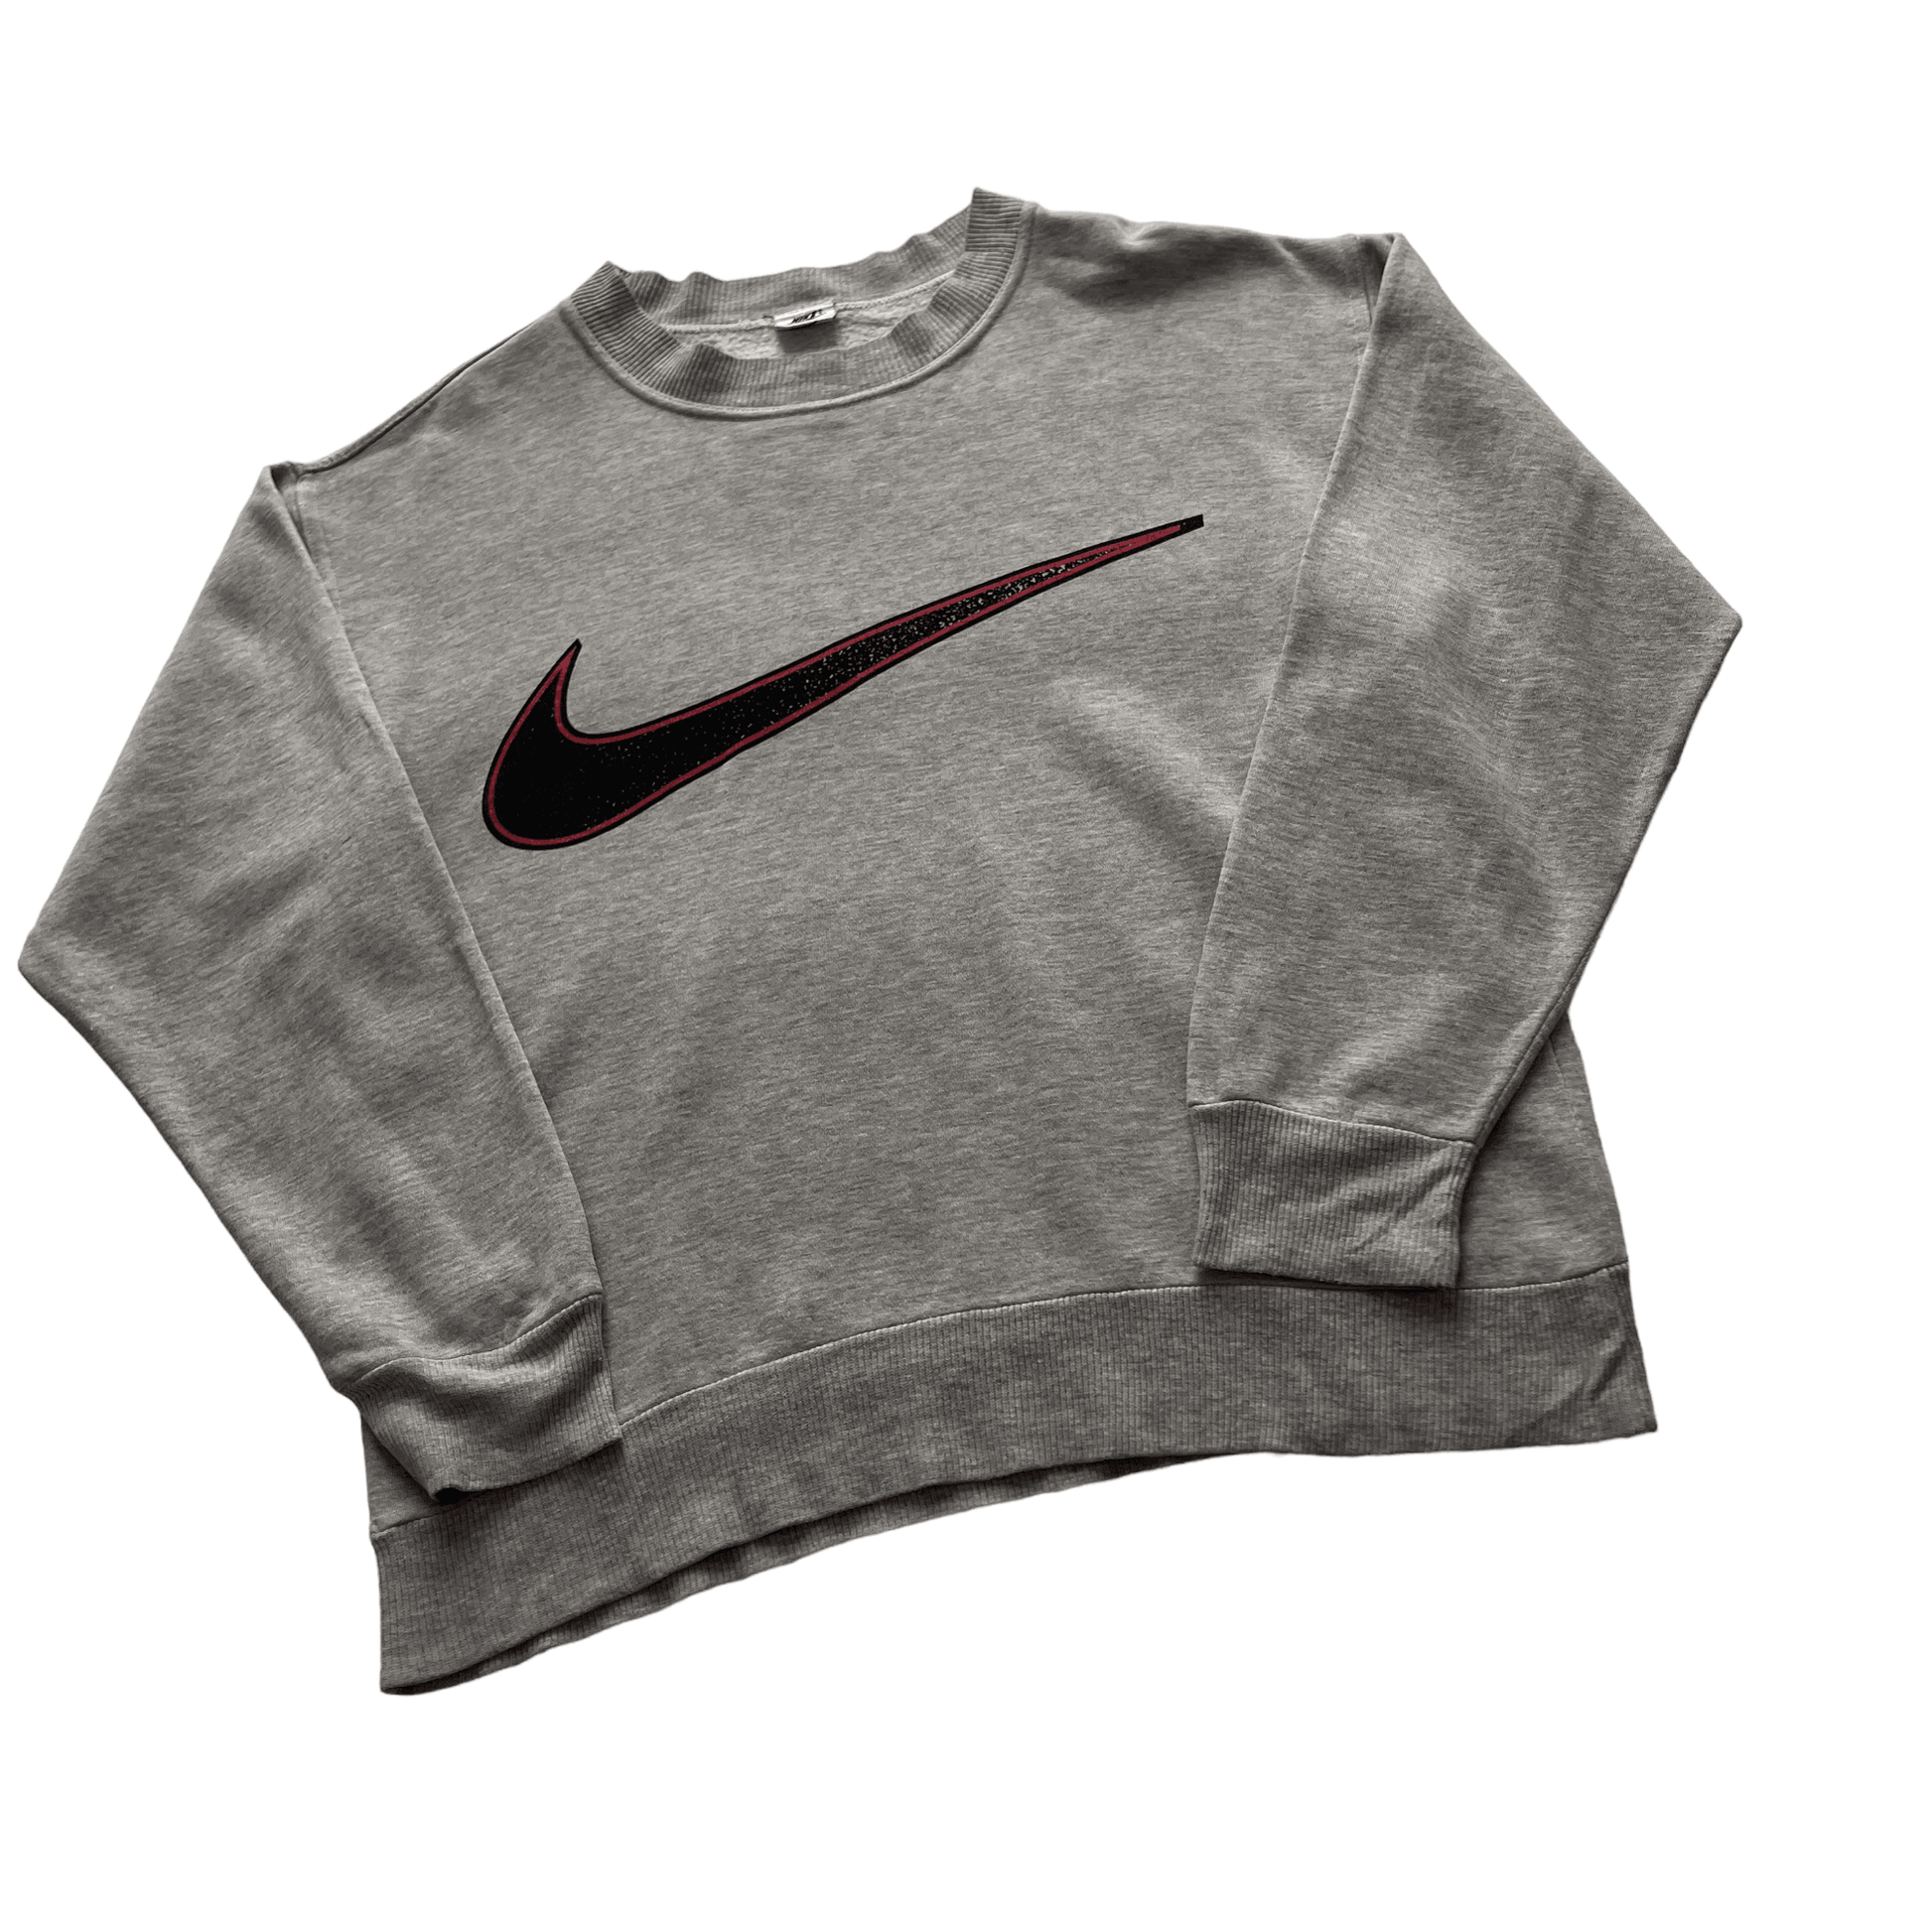 Vintage 90s Grey Nike Large Logo Sweatshirt - Medium - The Streetwear Studio